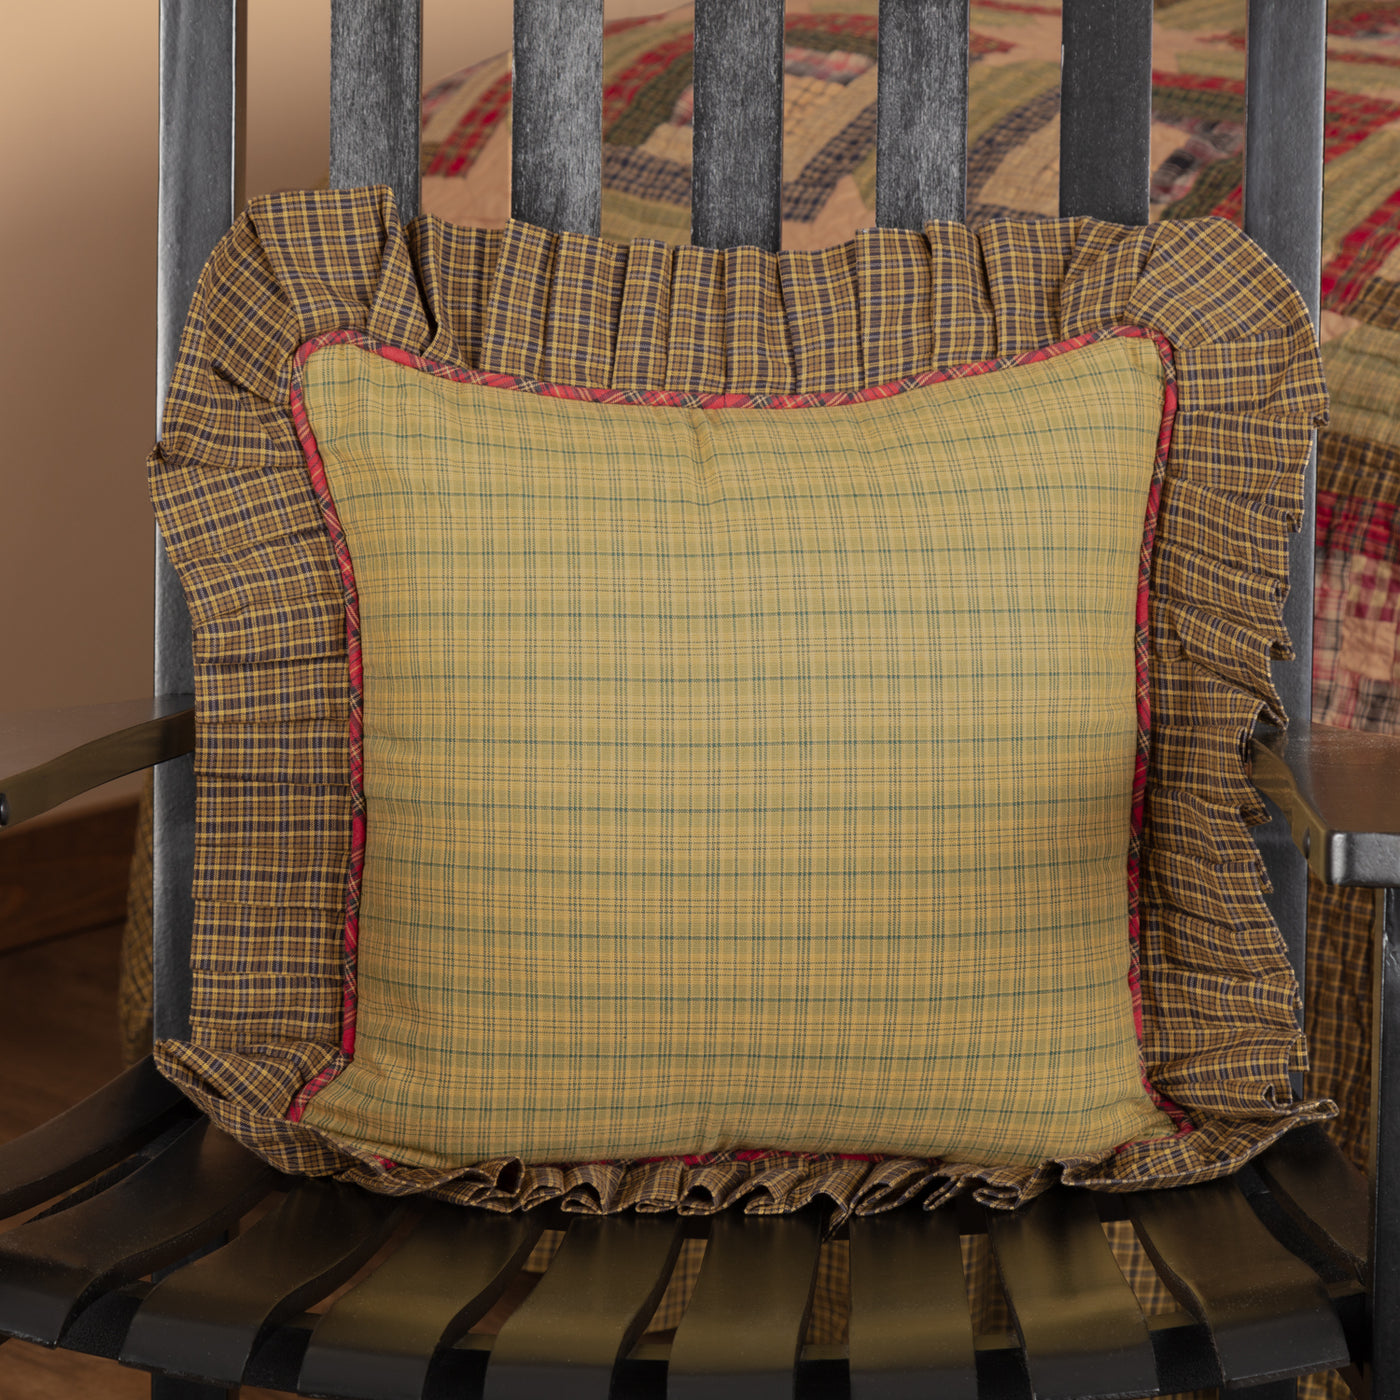 💙 Tea Cabin Fabric Ruffled 16" Pillow